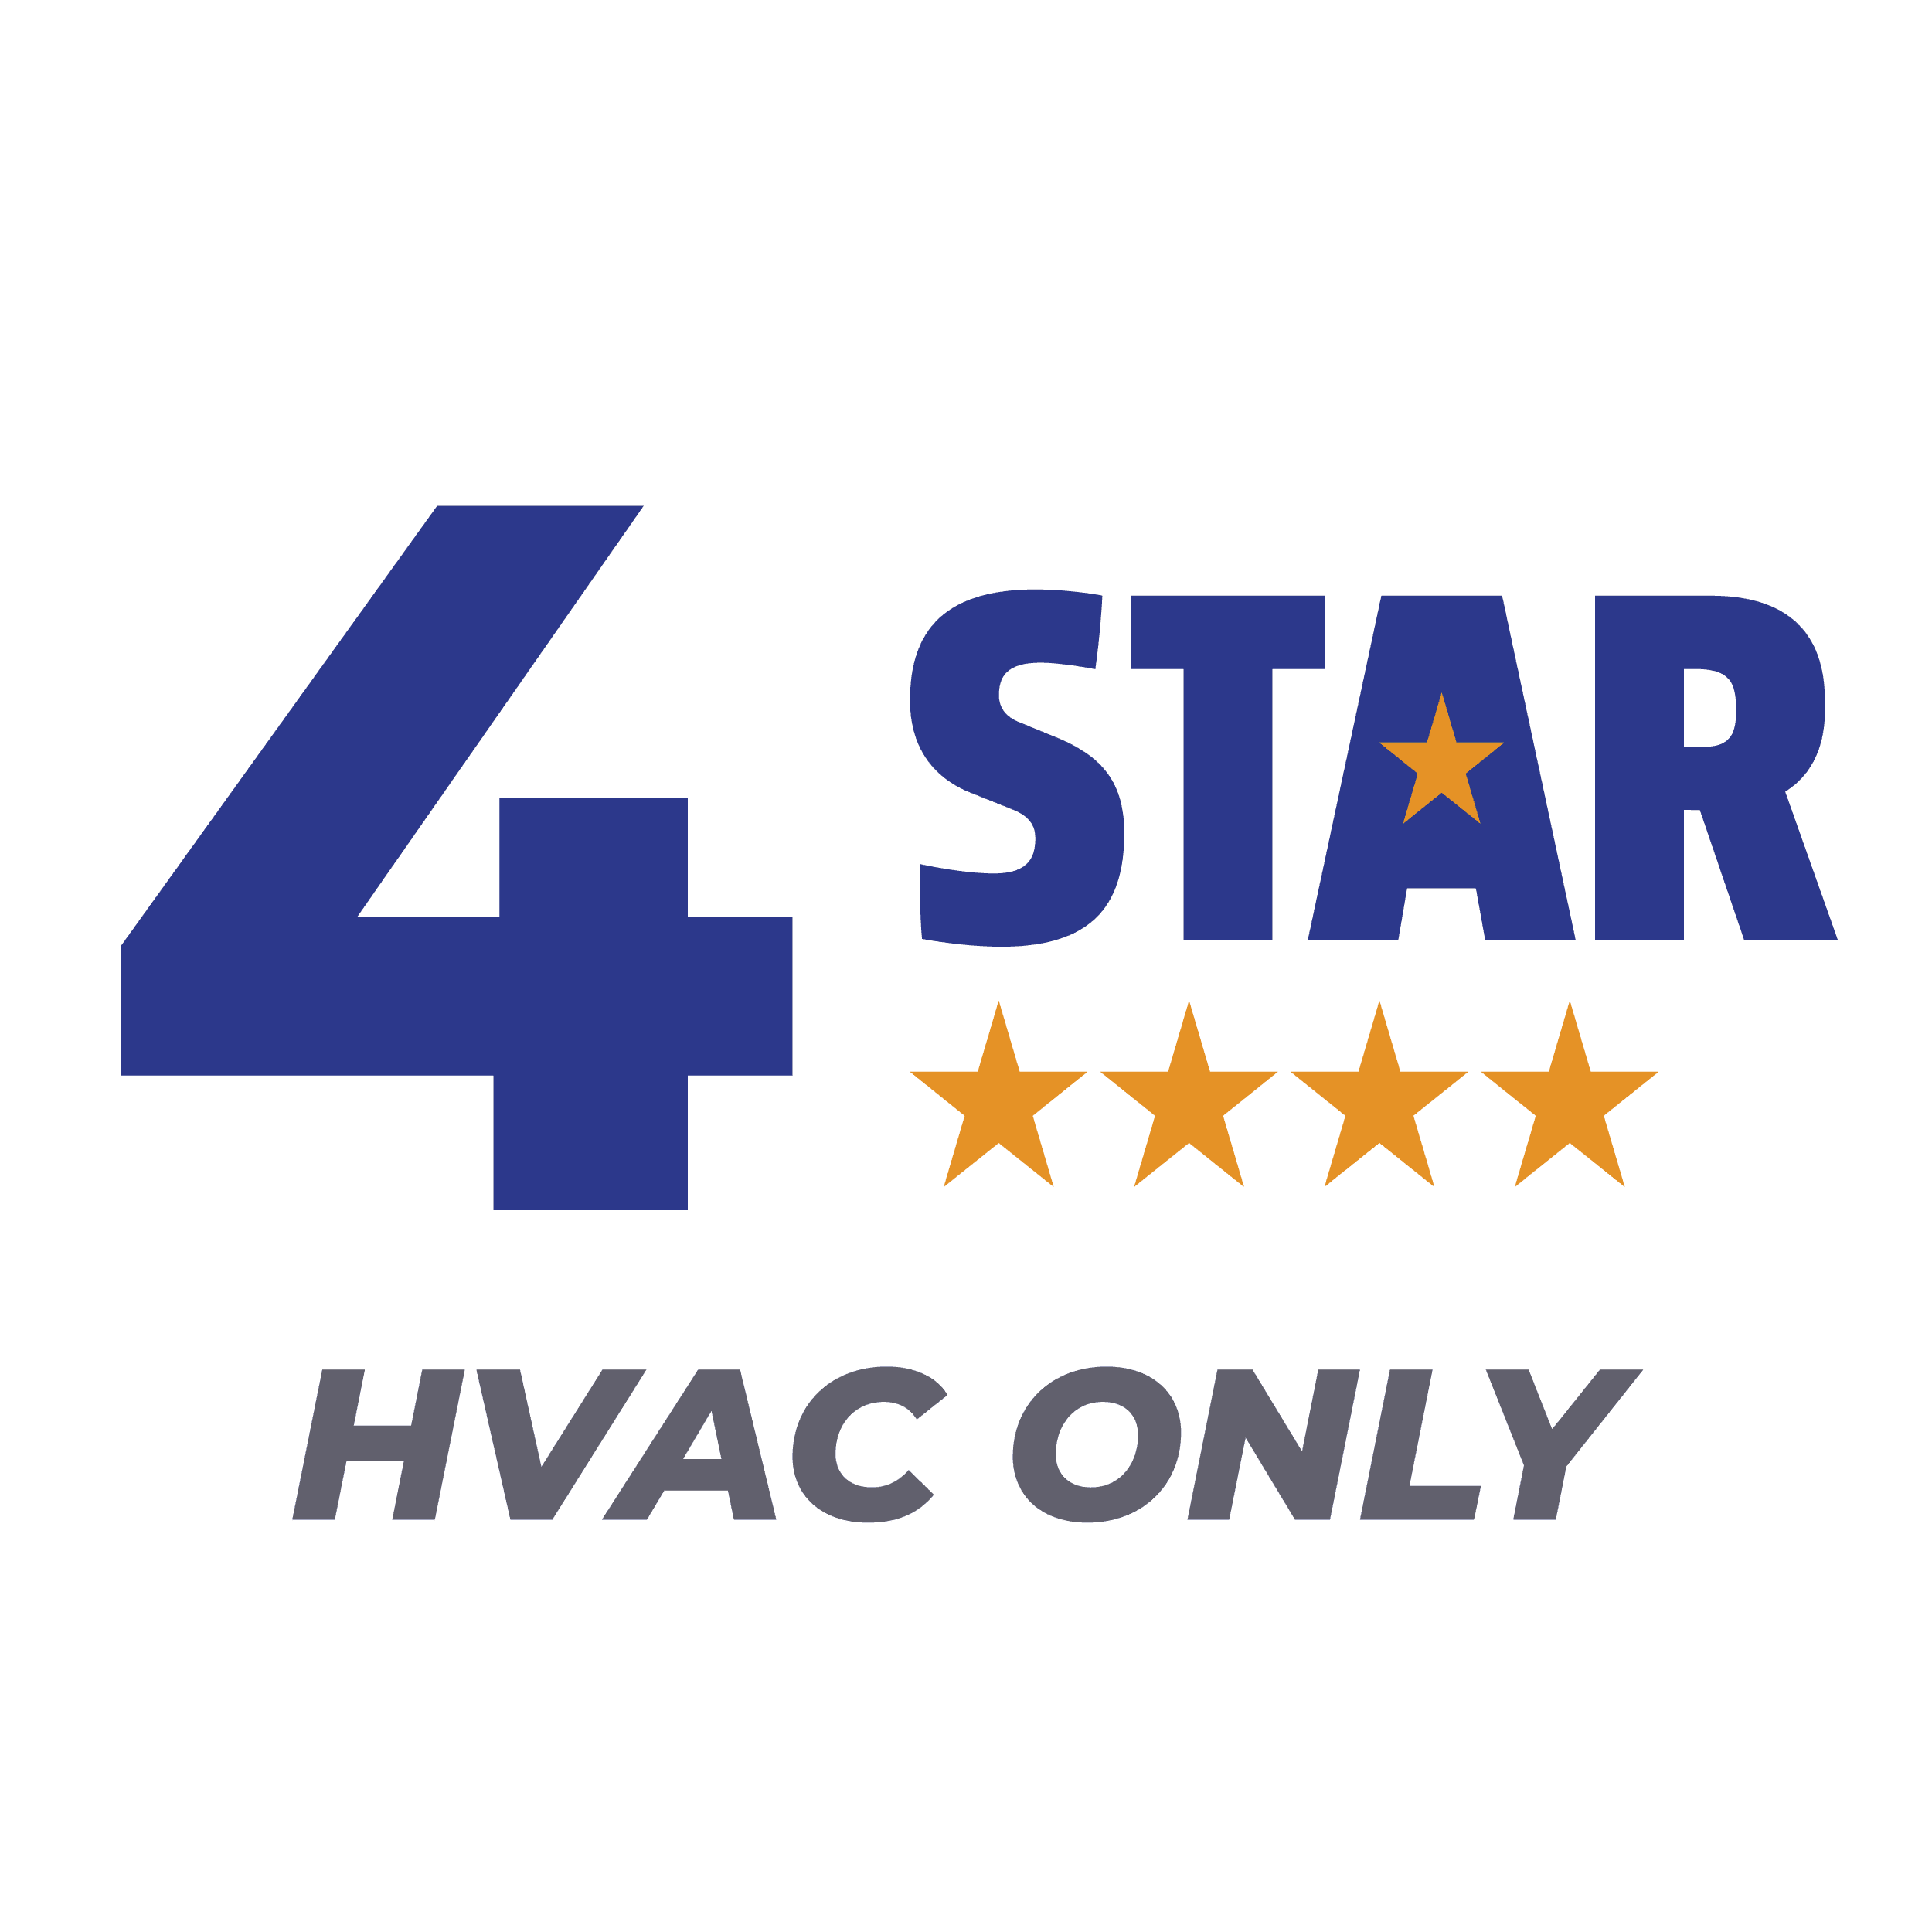 4-Star HVAC ONLY